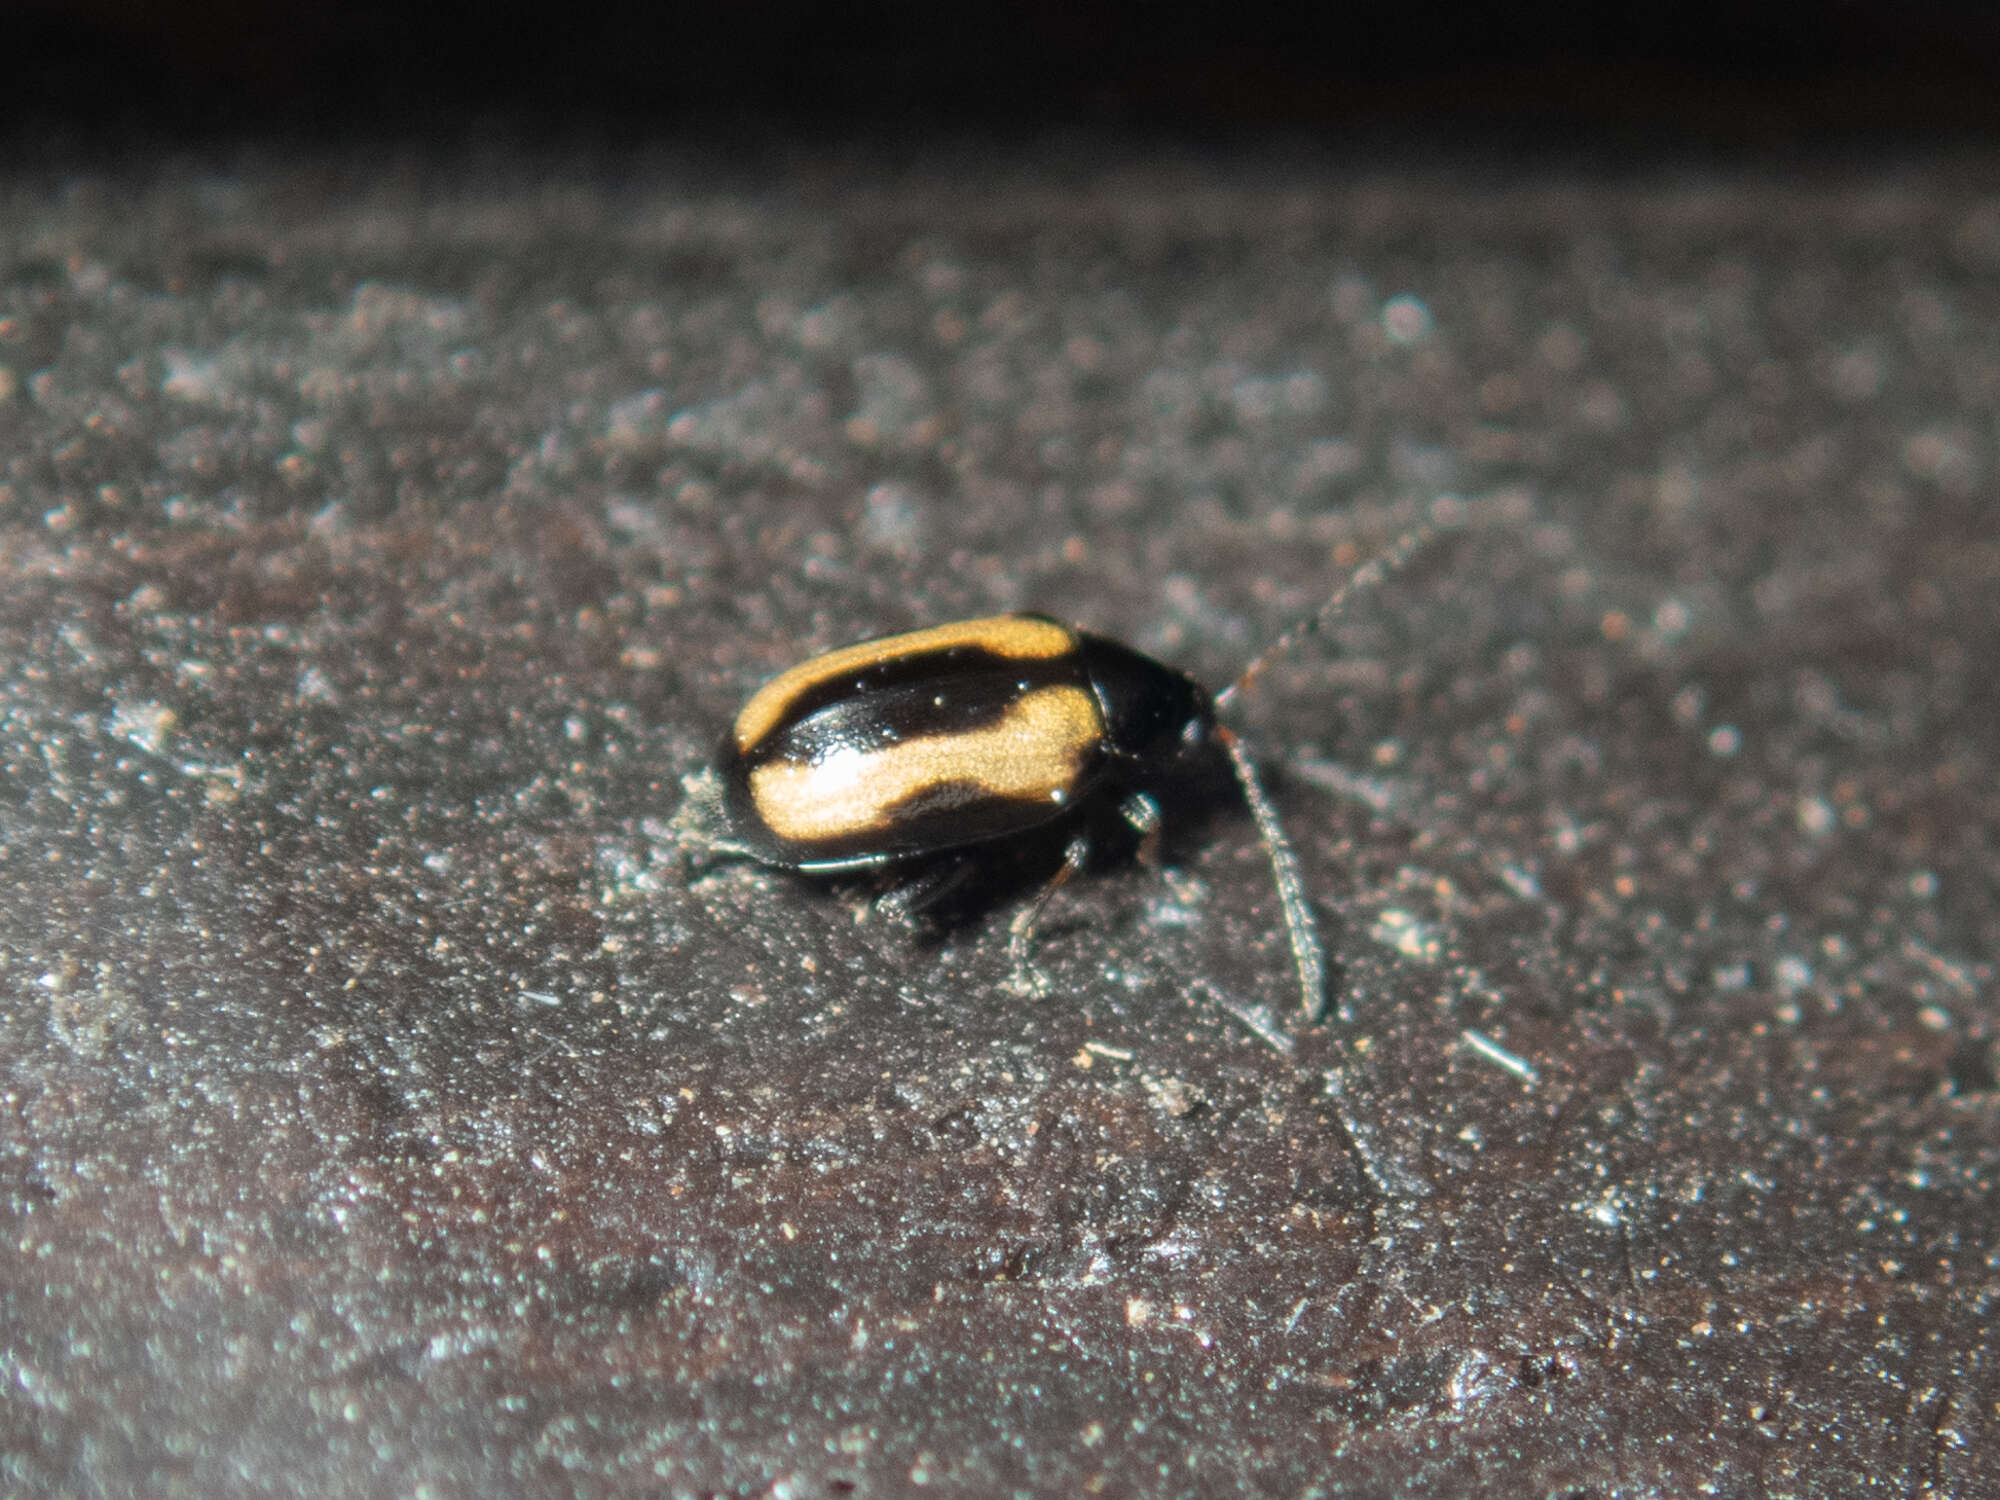 Image of Striped flea beetle